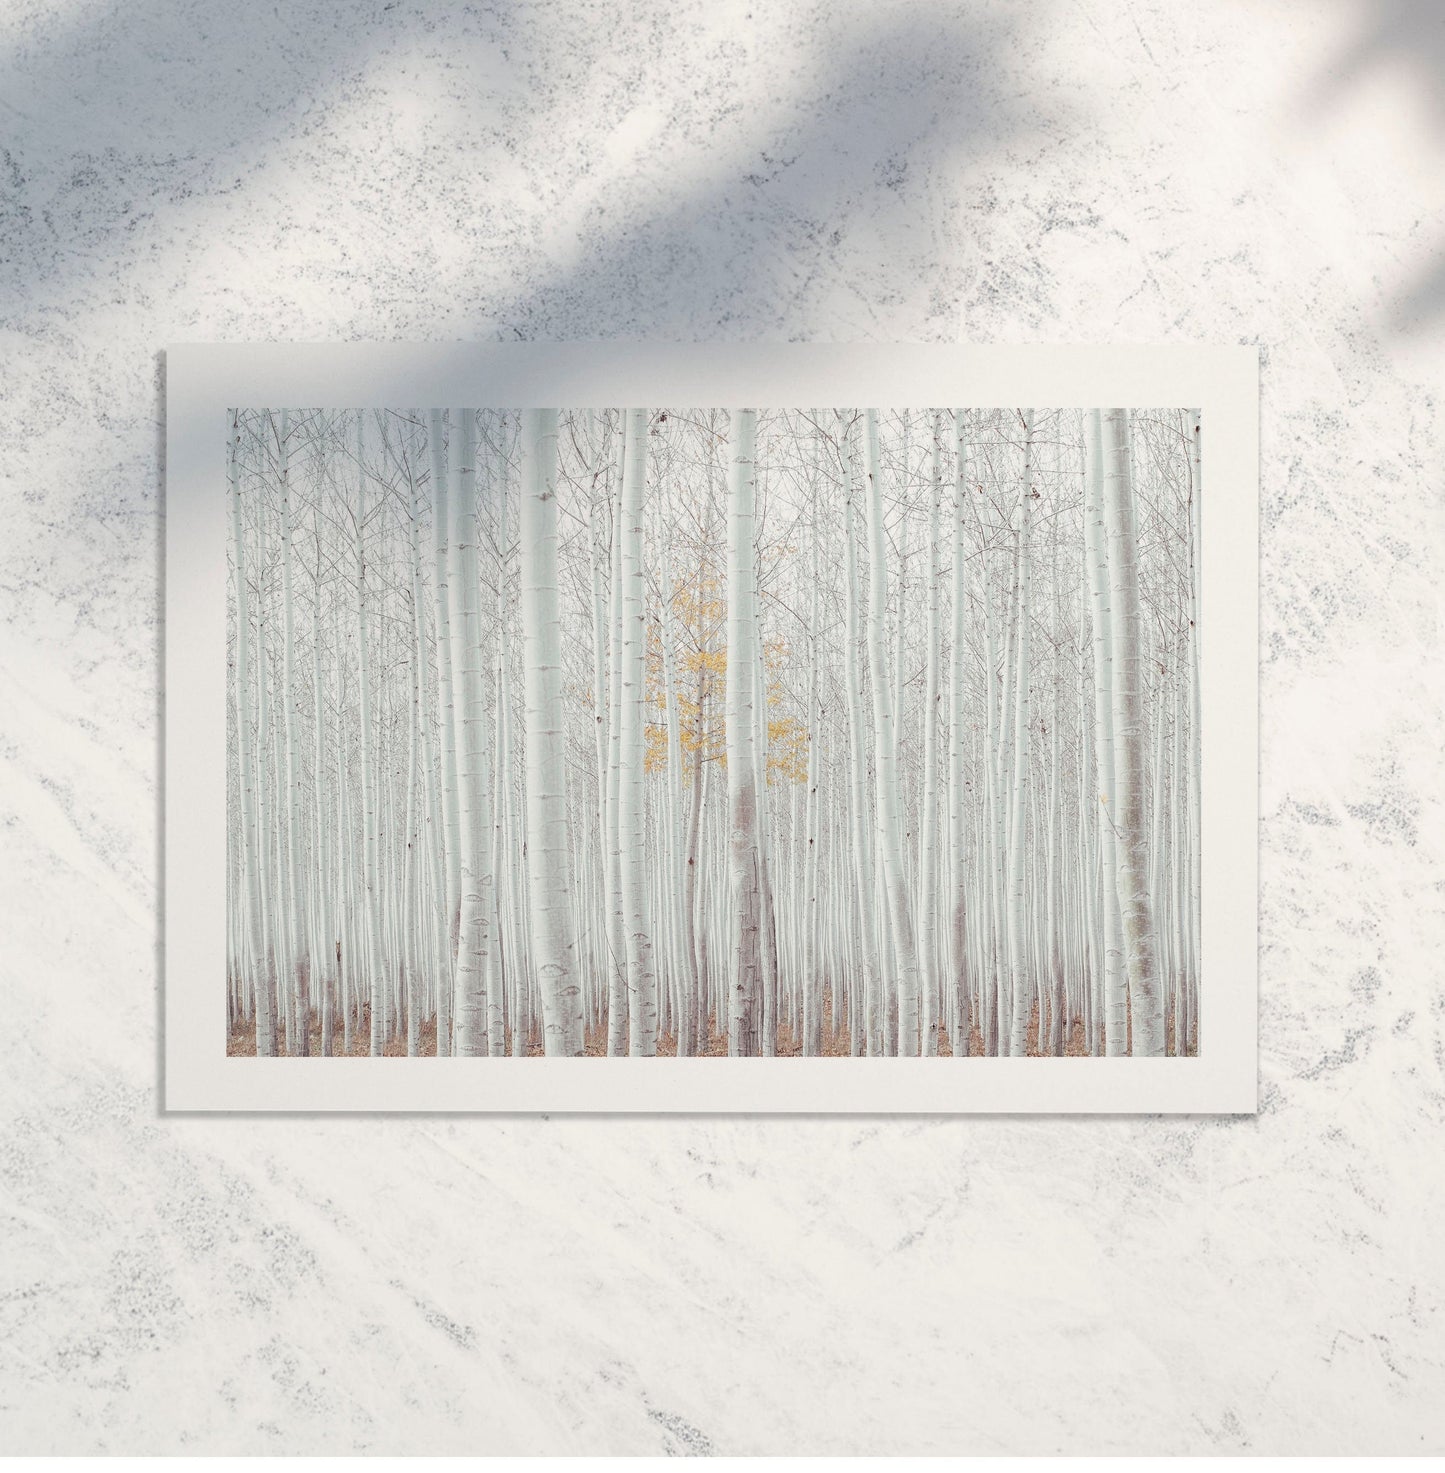 Framed White Birch trees print, birch photo abstract landscape print, minimalist landscape nature photography print, birch forest art